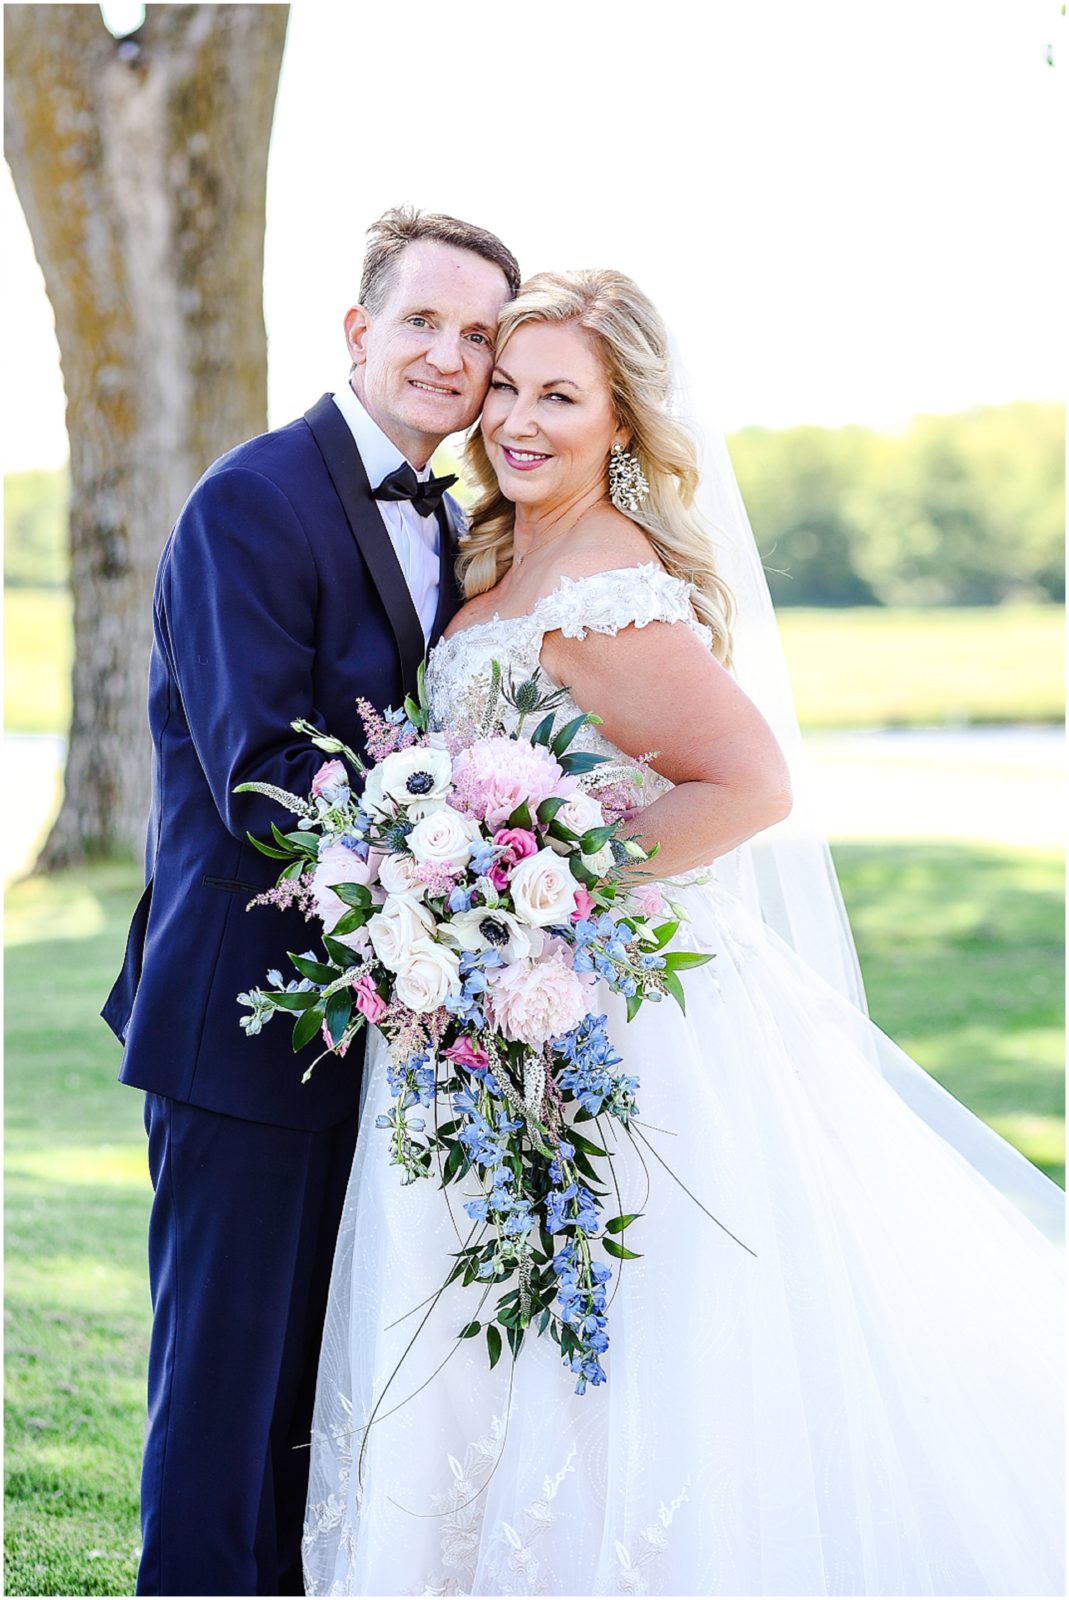 the happy couple - Lake Mozingo Wedding - Kansas City Wedding Photographer - Beautiful Wedding portraits on a golf course - mozingo golf club - bride & groom portraits